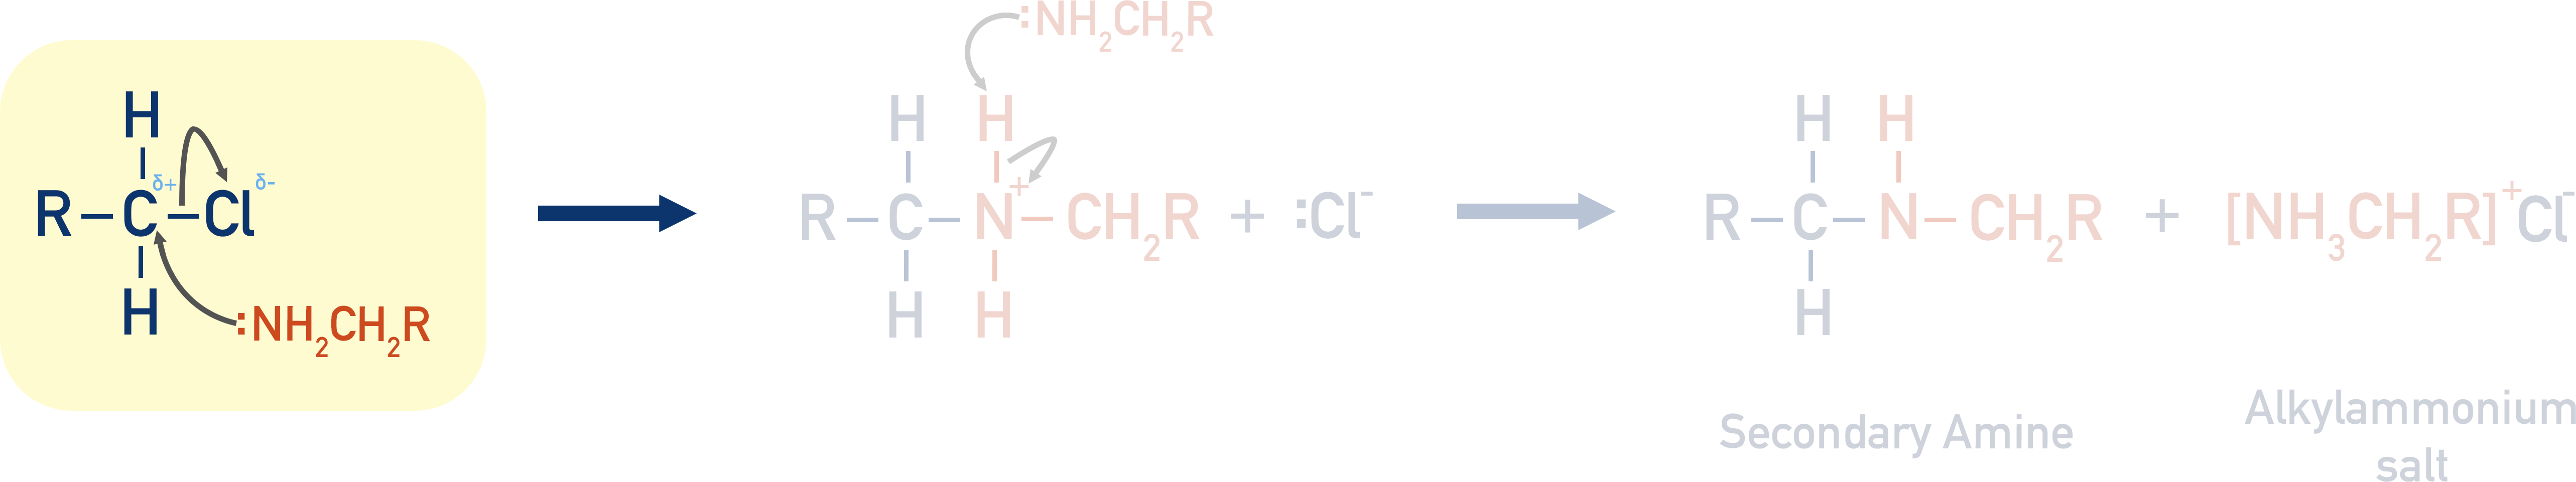 secondary amine mechanism from halogenoalkane and primary amine step 1